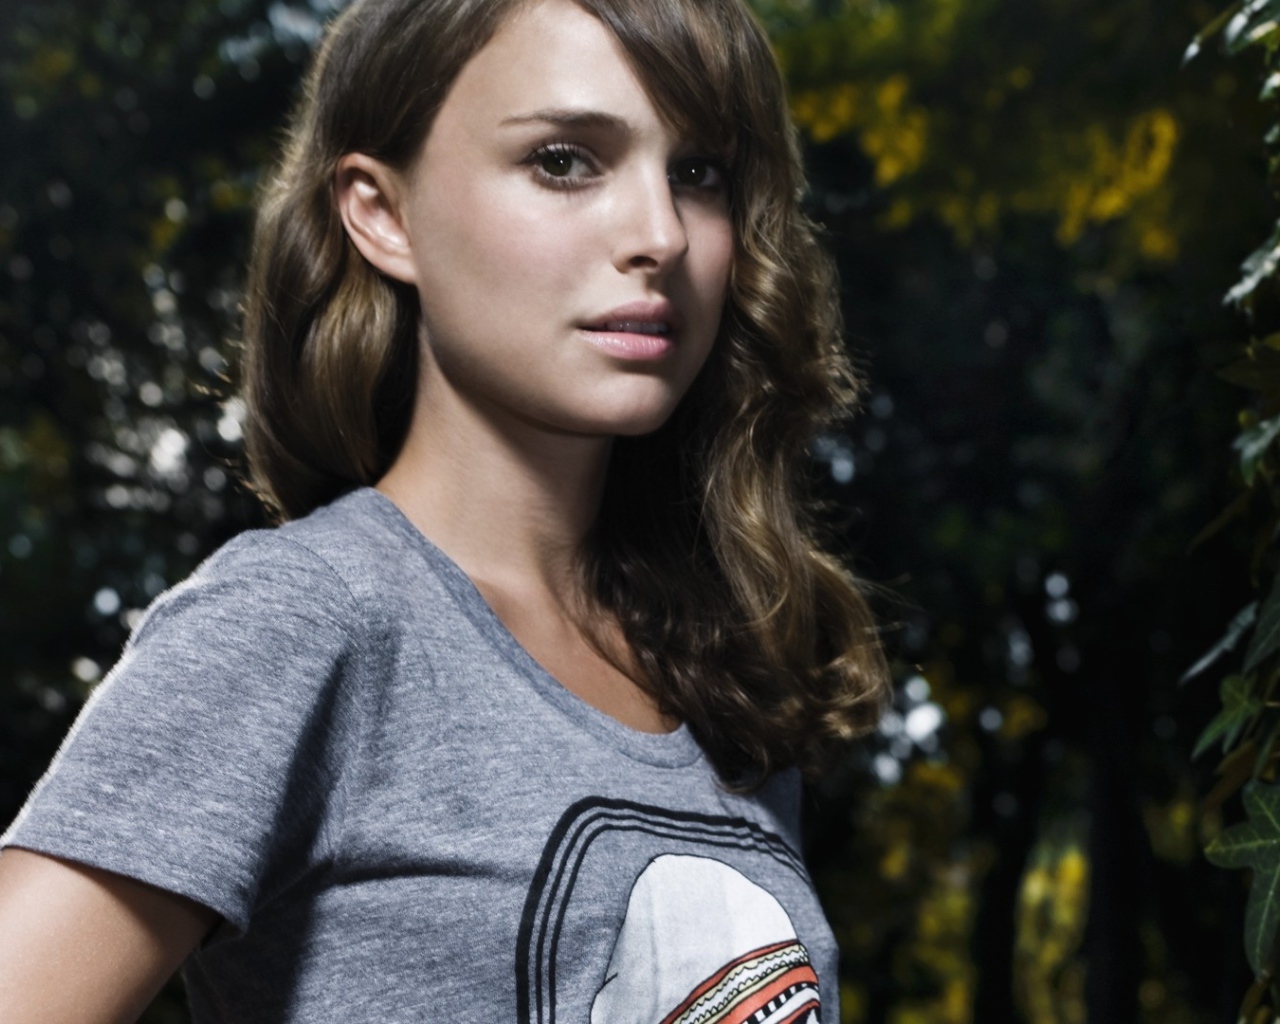 Natalie Portman in a t-shirt